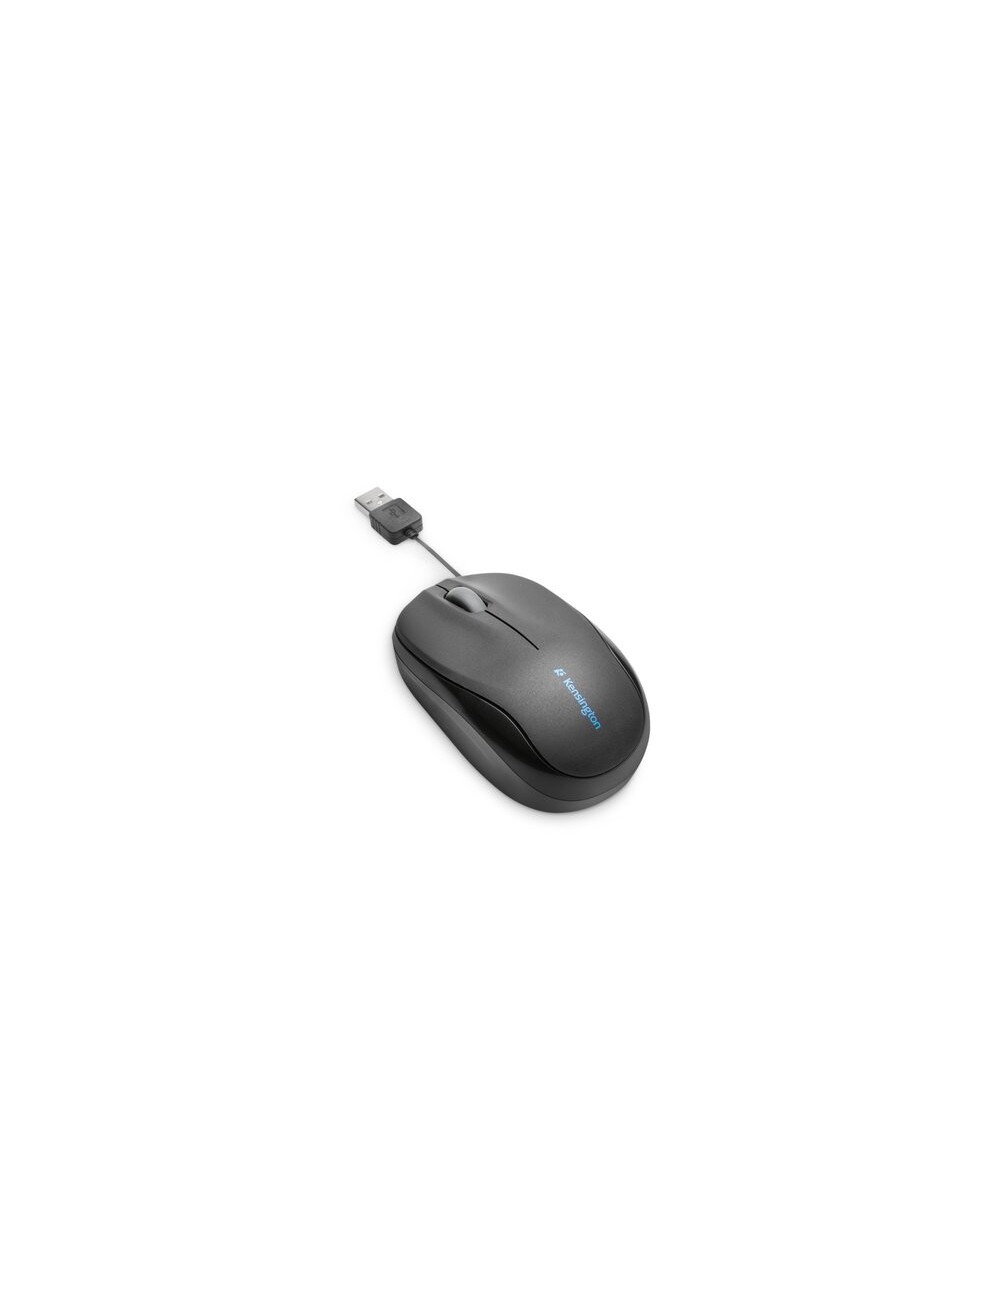 Kensington Mouse Pro Fit™ portatile con cavo riavvolgibile